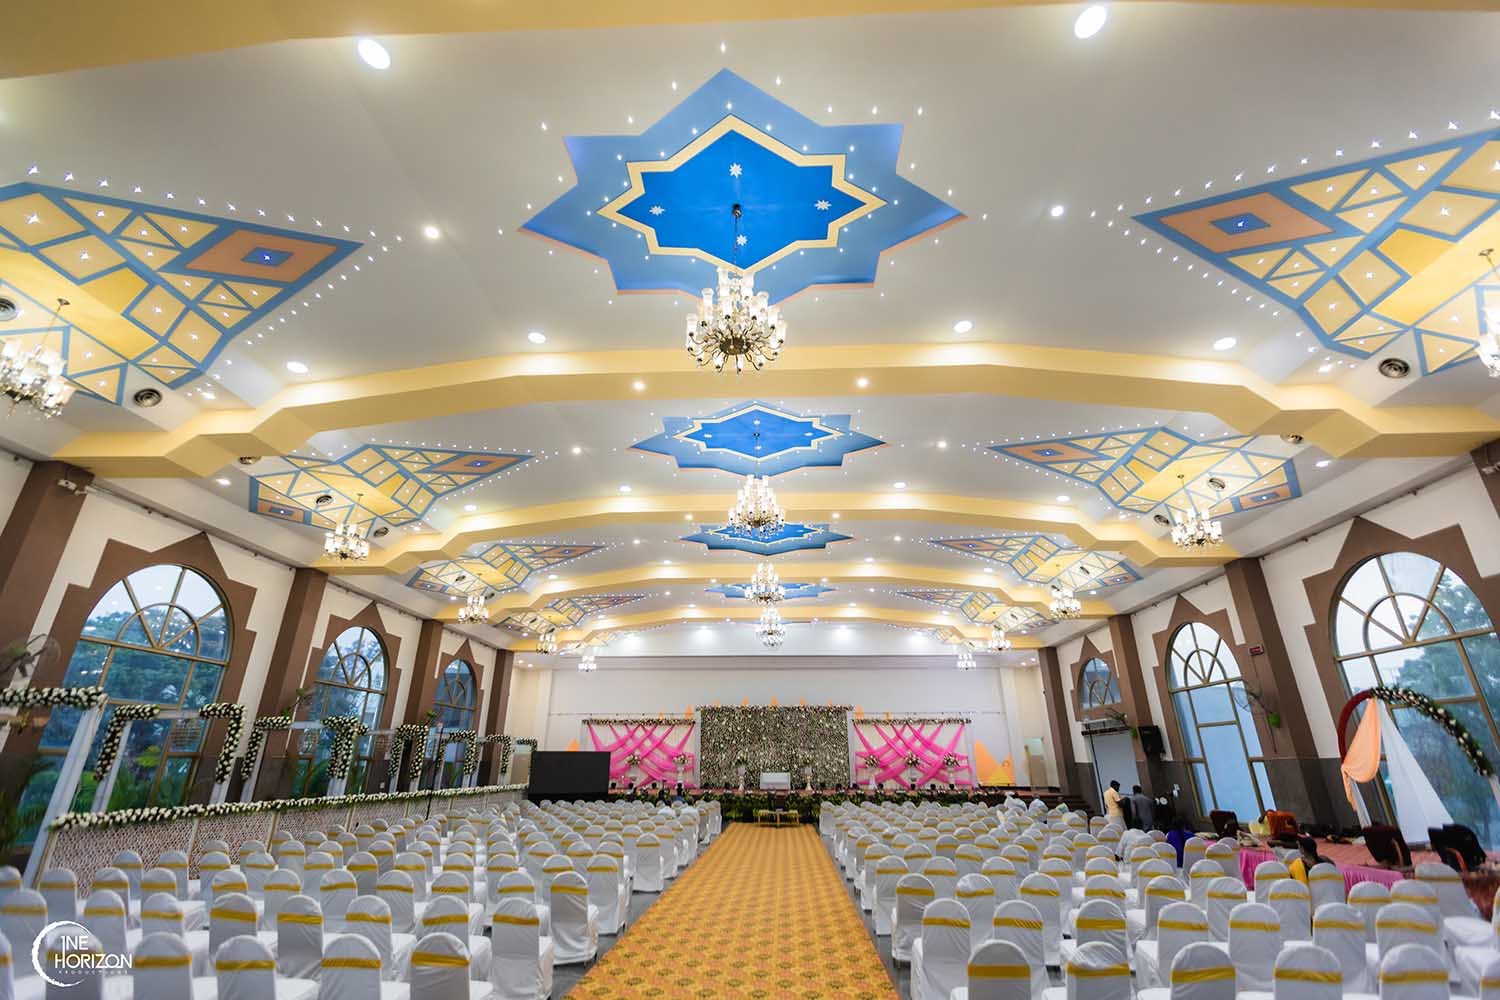 Expansive seating arrangements at Sun Palace Hotel banquet halls